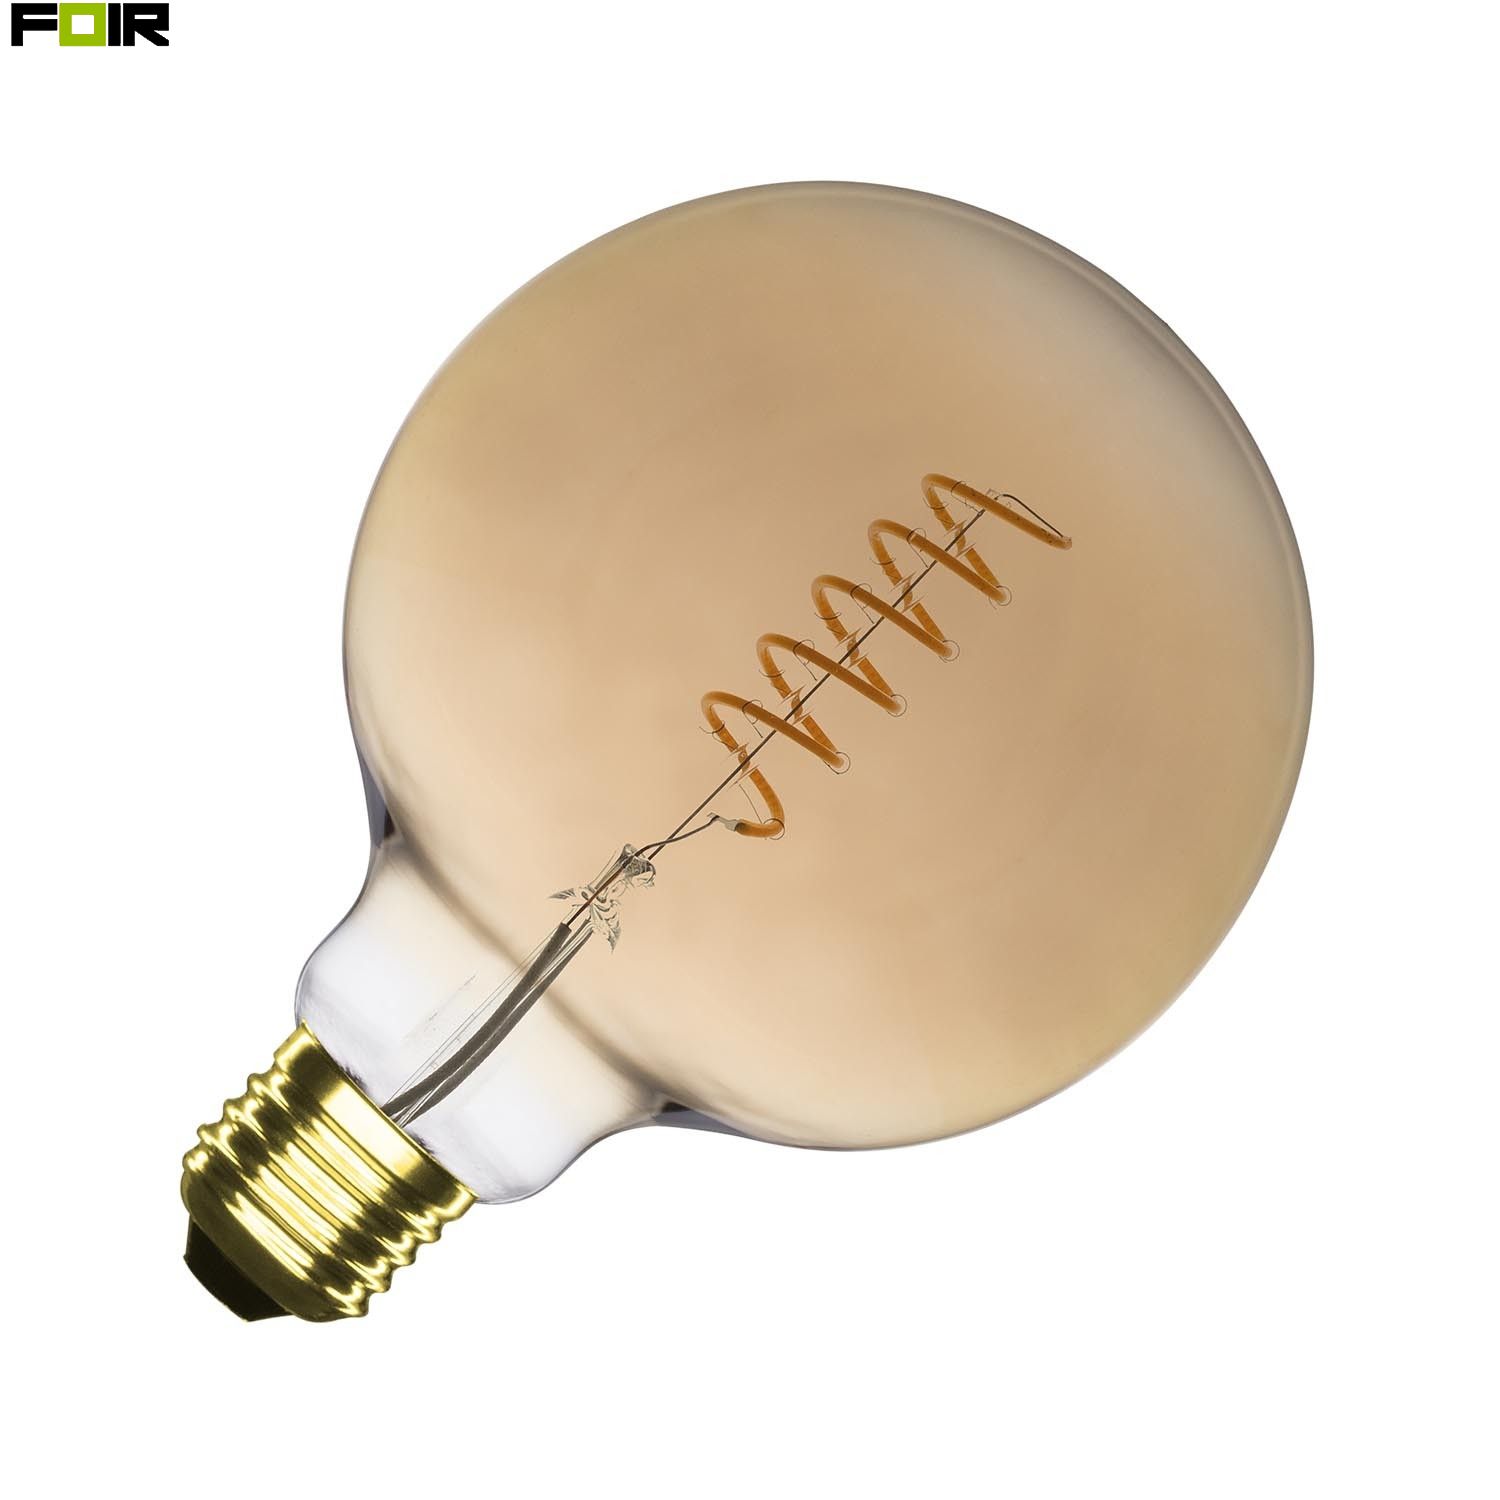 Beginner Actuator dak G125 E27 4W Supreme Spiral gouden gloeidraad LED lamp (dimbaar)